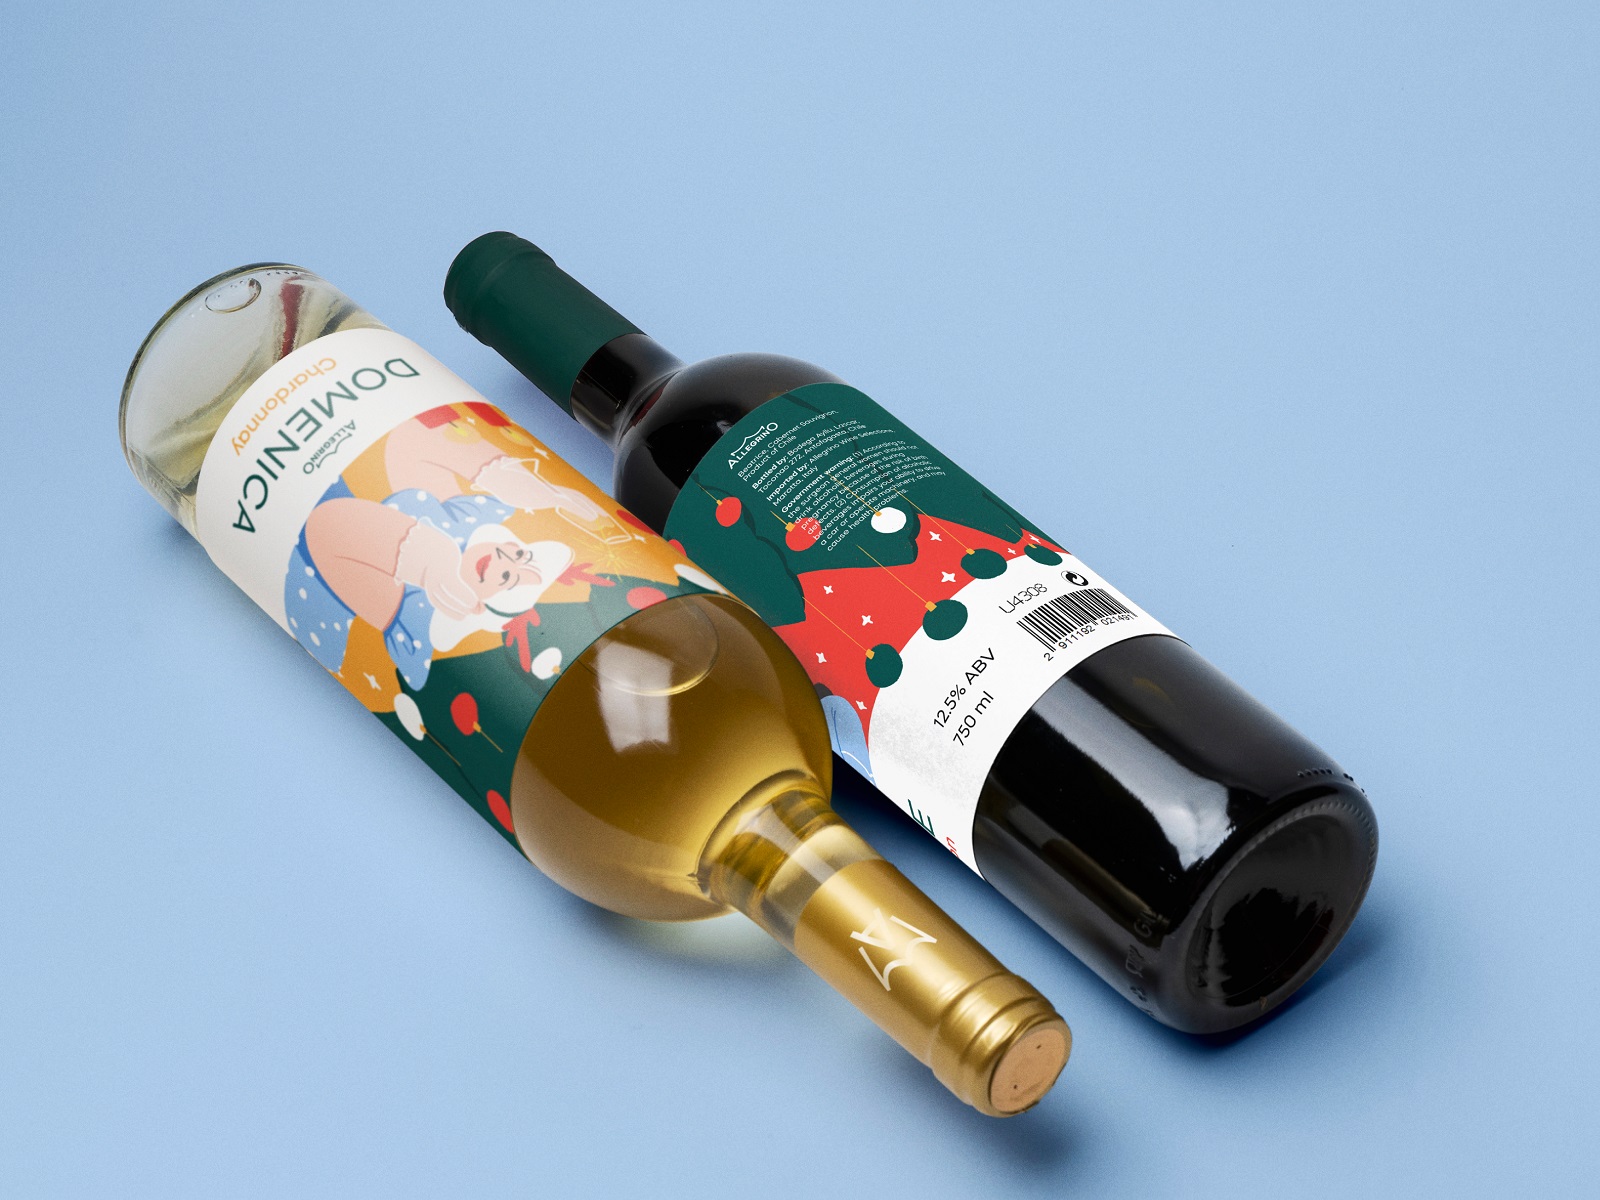 holiday edition wine bottles design